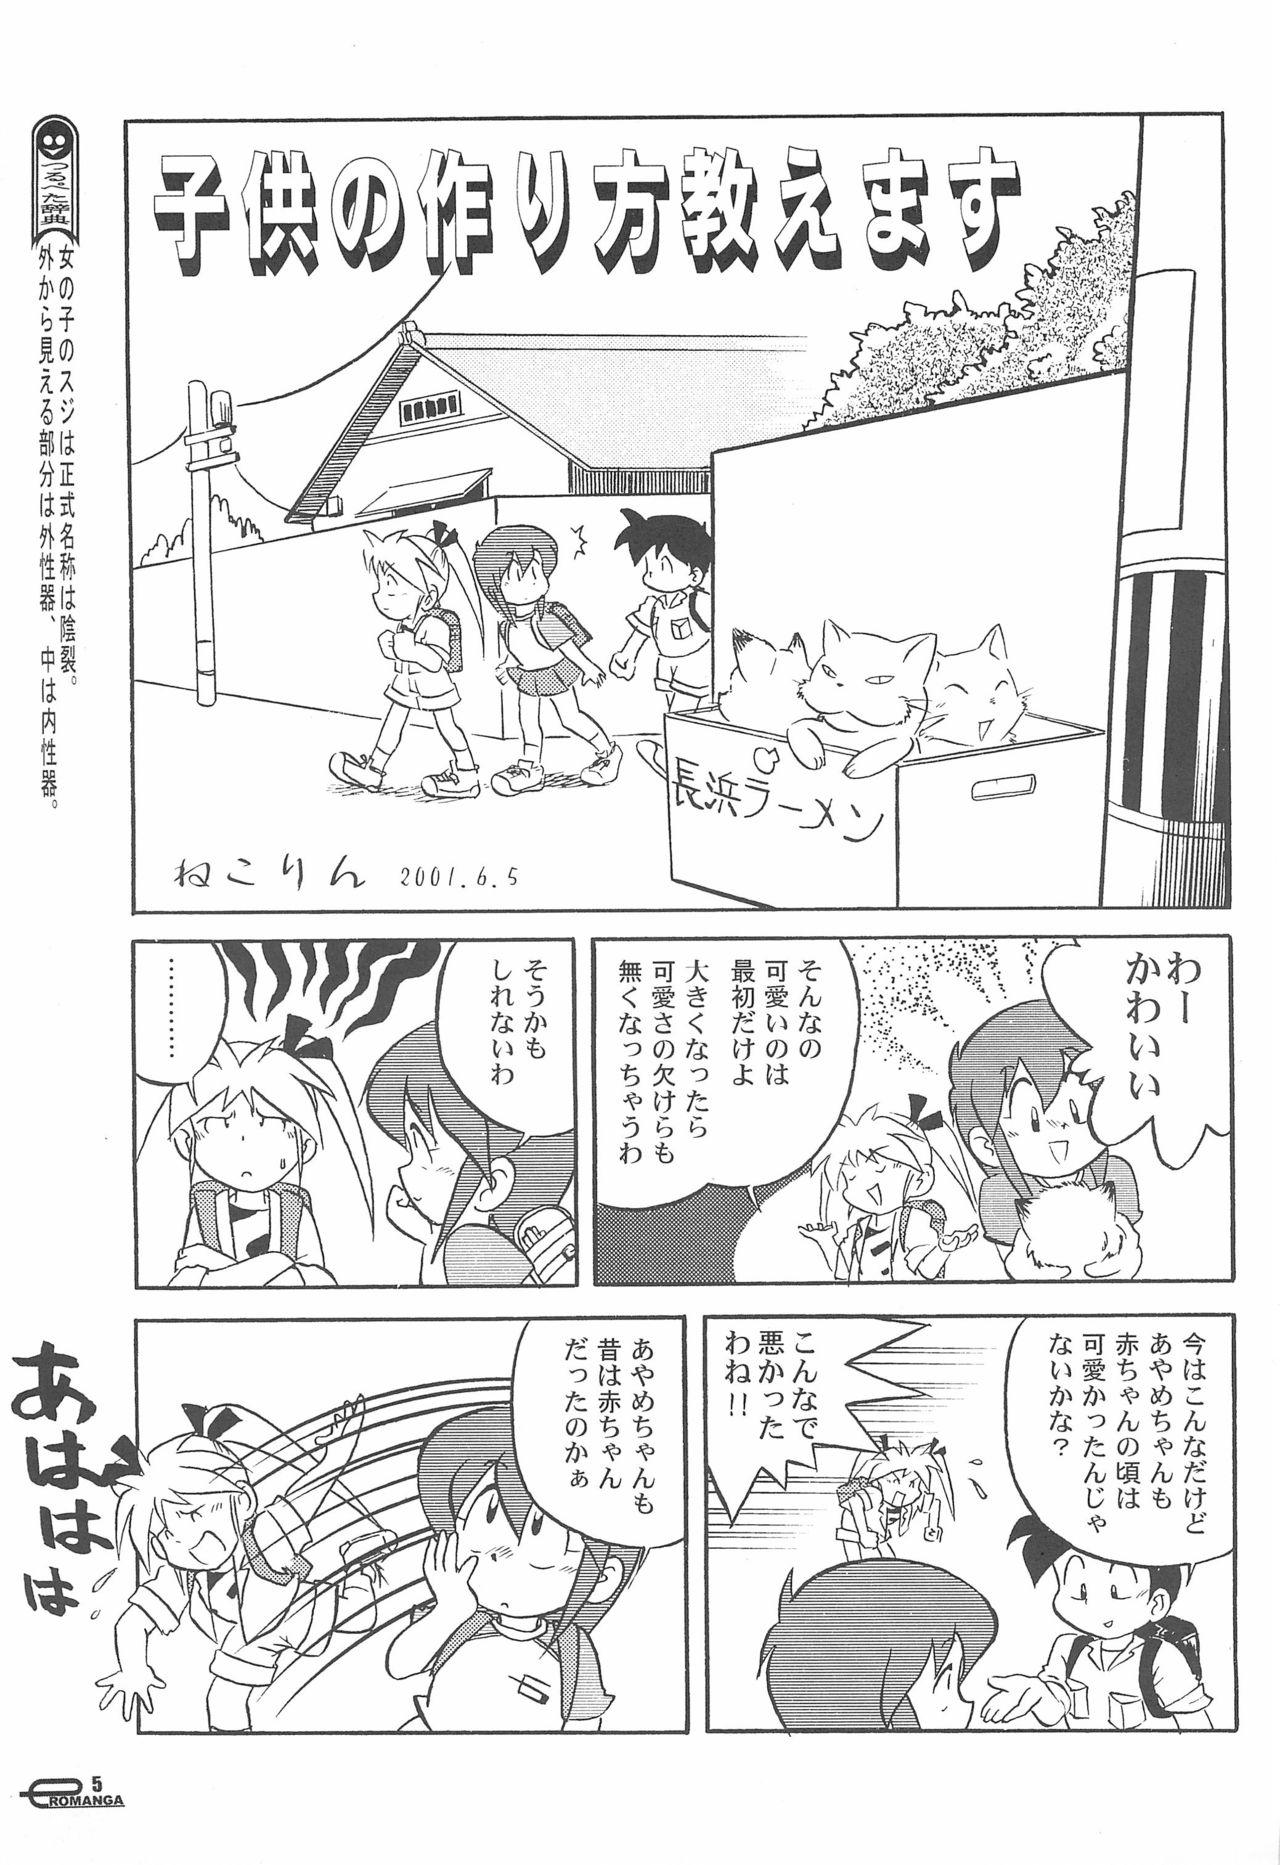 Free Blow Job Manga Science Onna no ko no Himitsu - Manga science Banging - Page 7